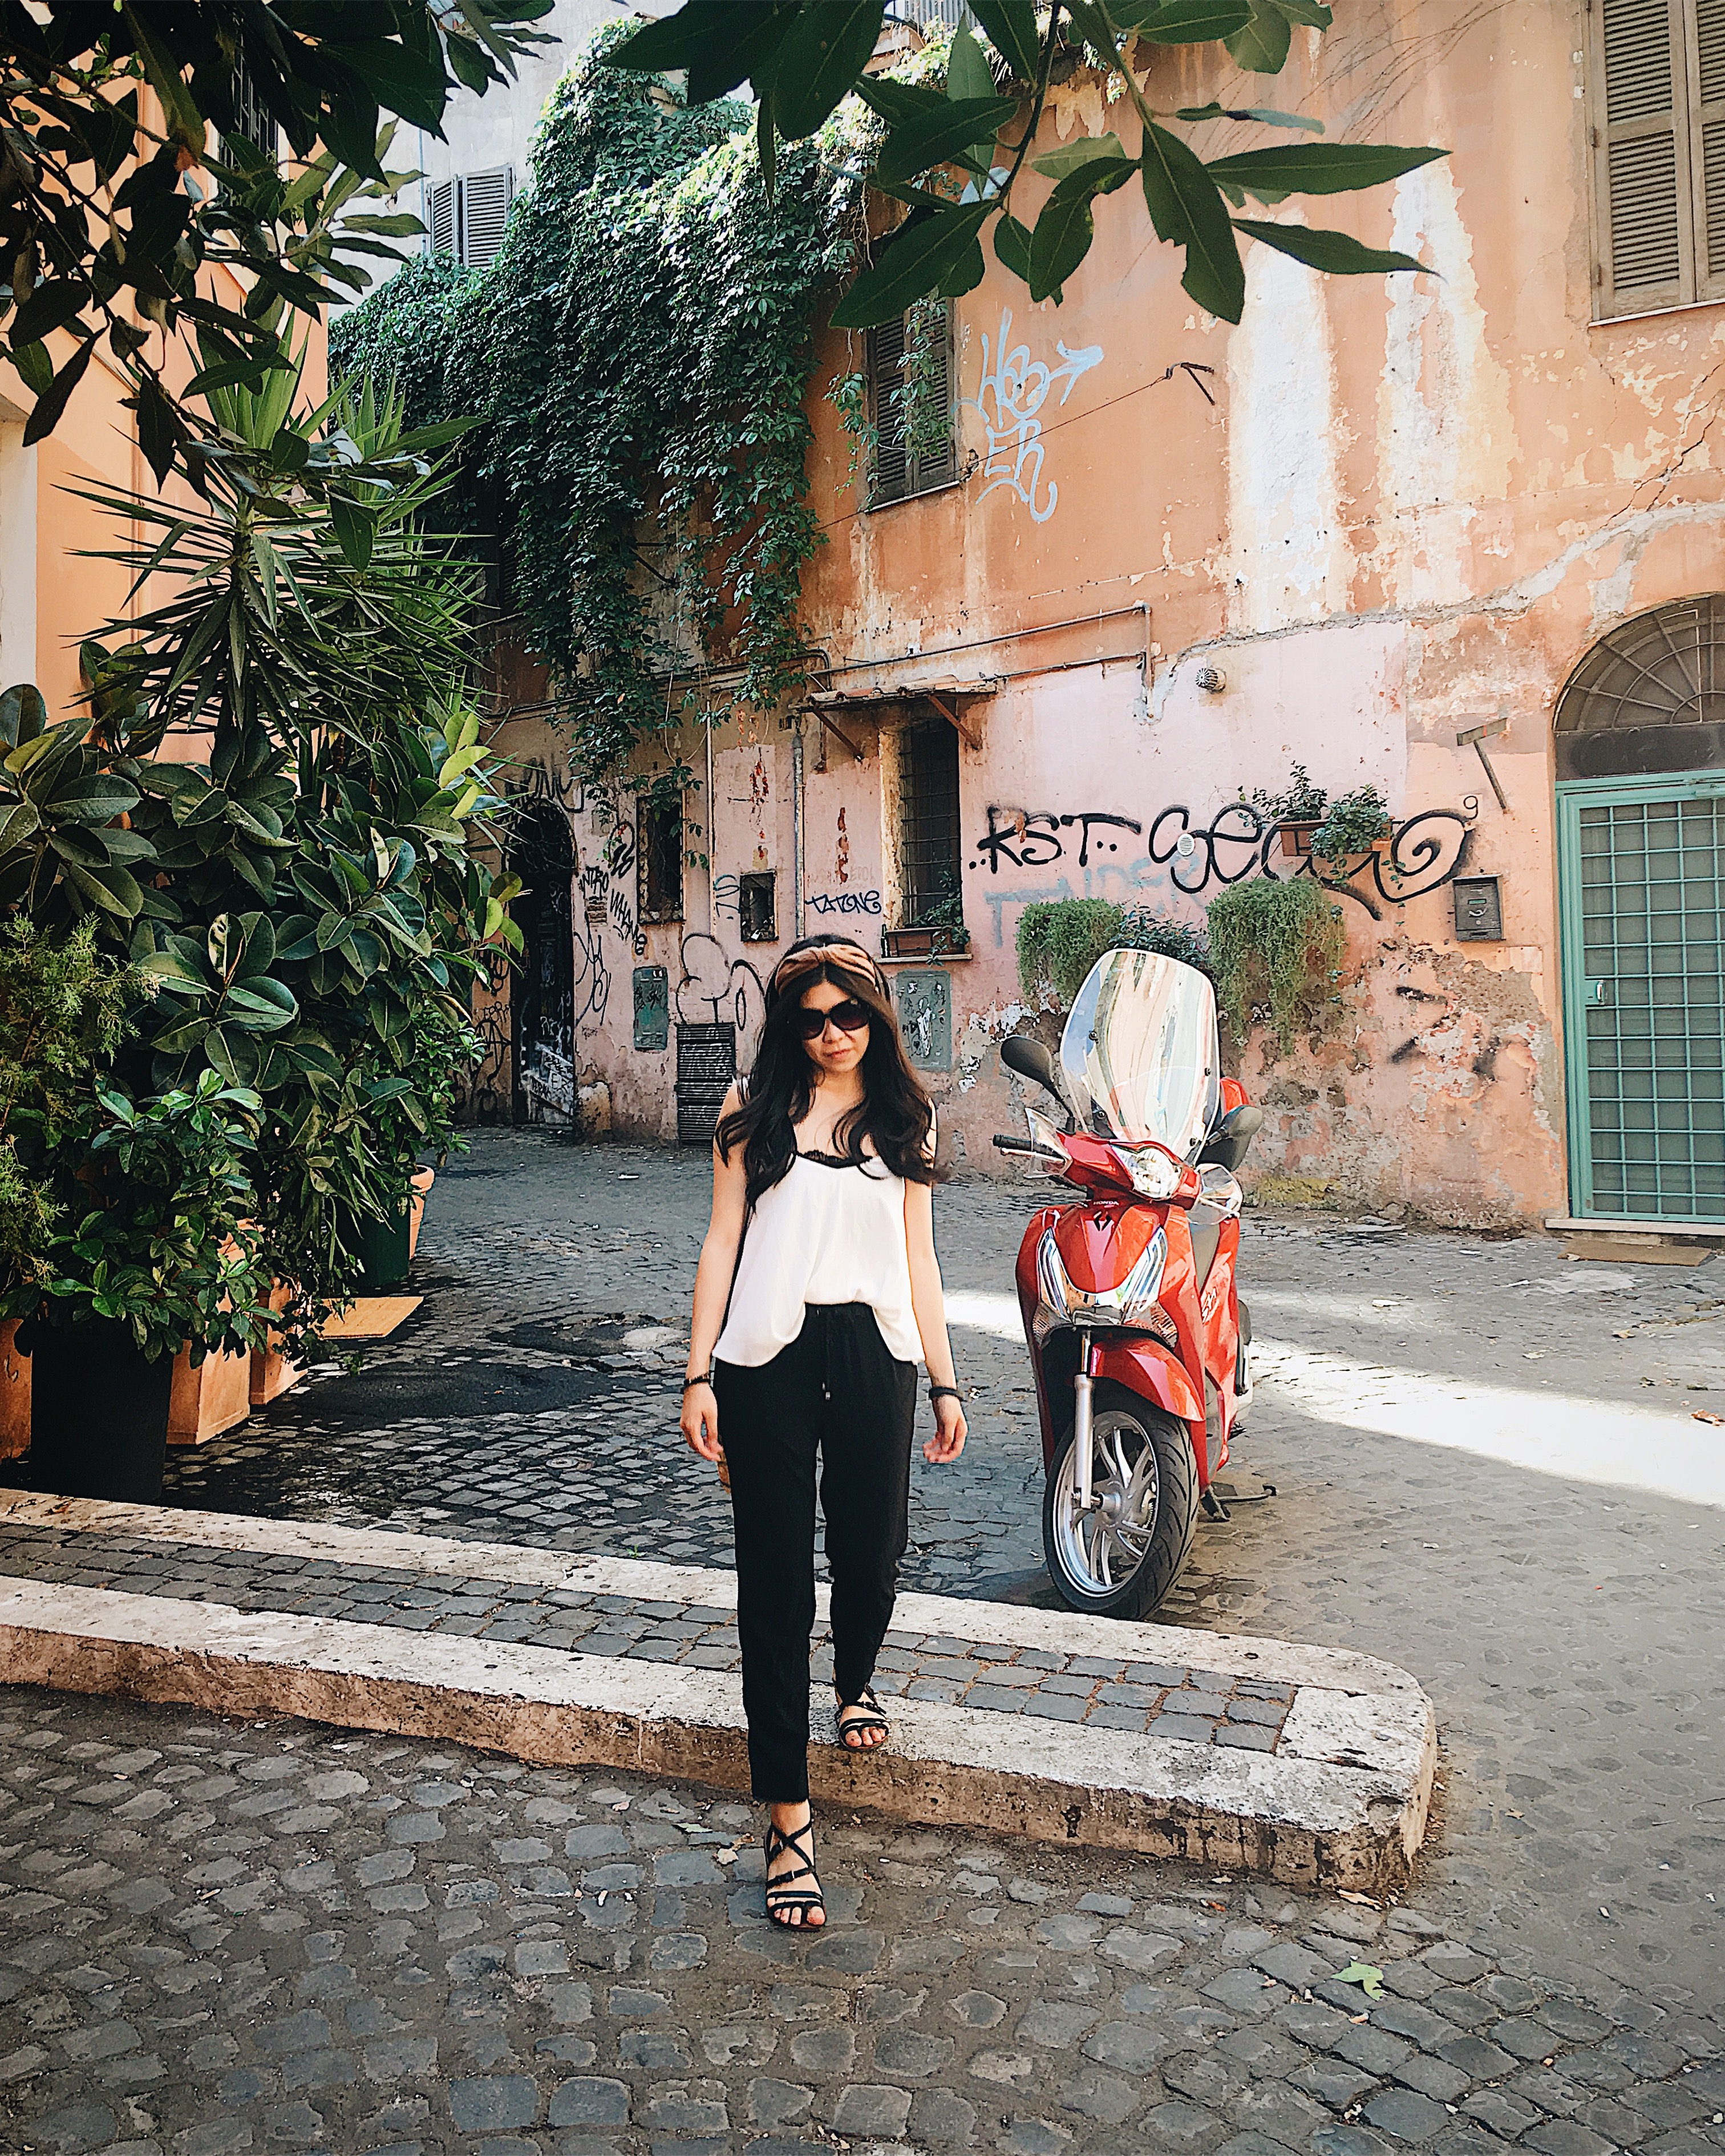 Walking the streets of Trastevere